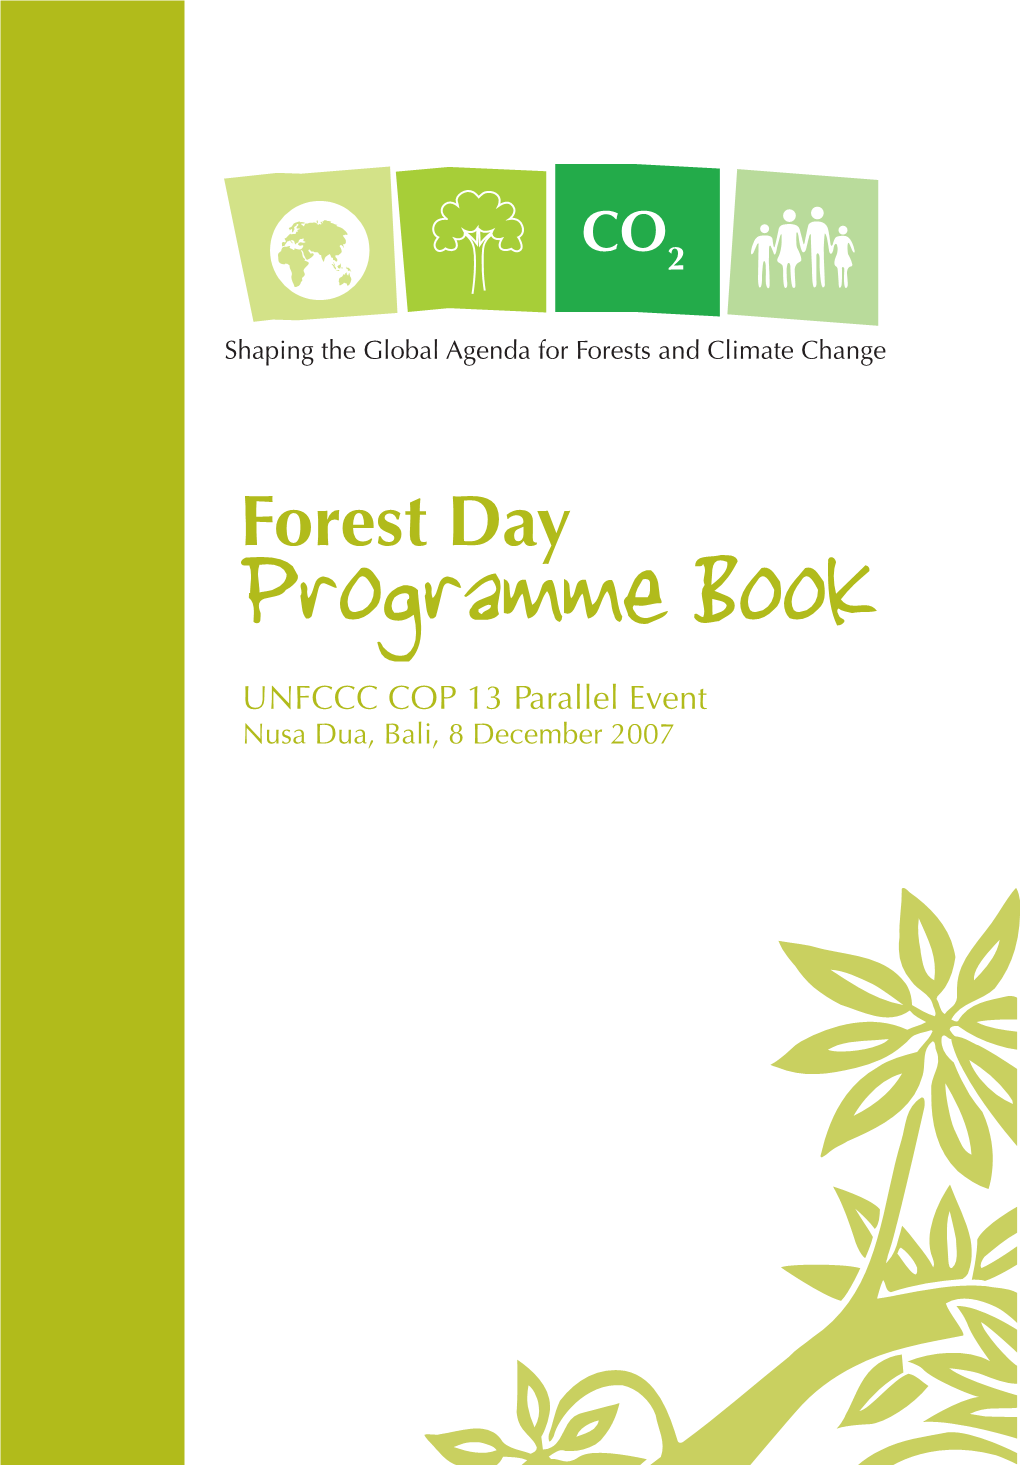 Forest Day Programme Book, UNFCCC COP 13 Parallel Event, Nusa Dua, Bali, 8 December 2007